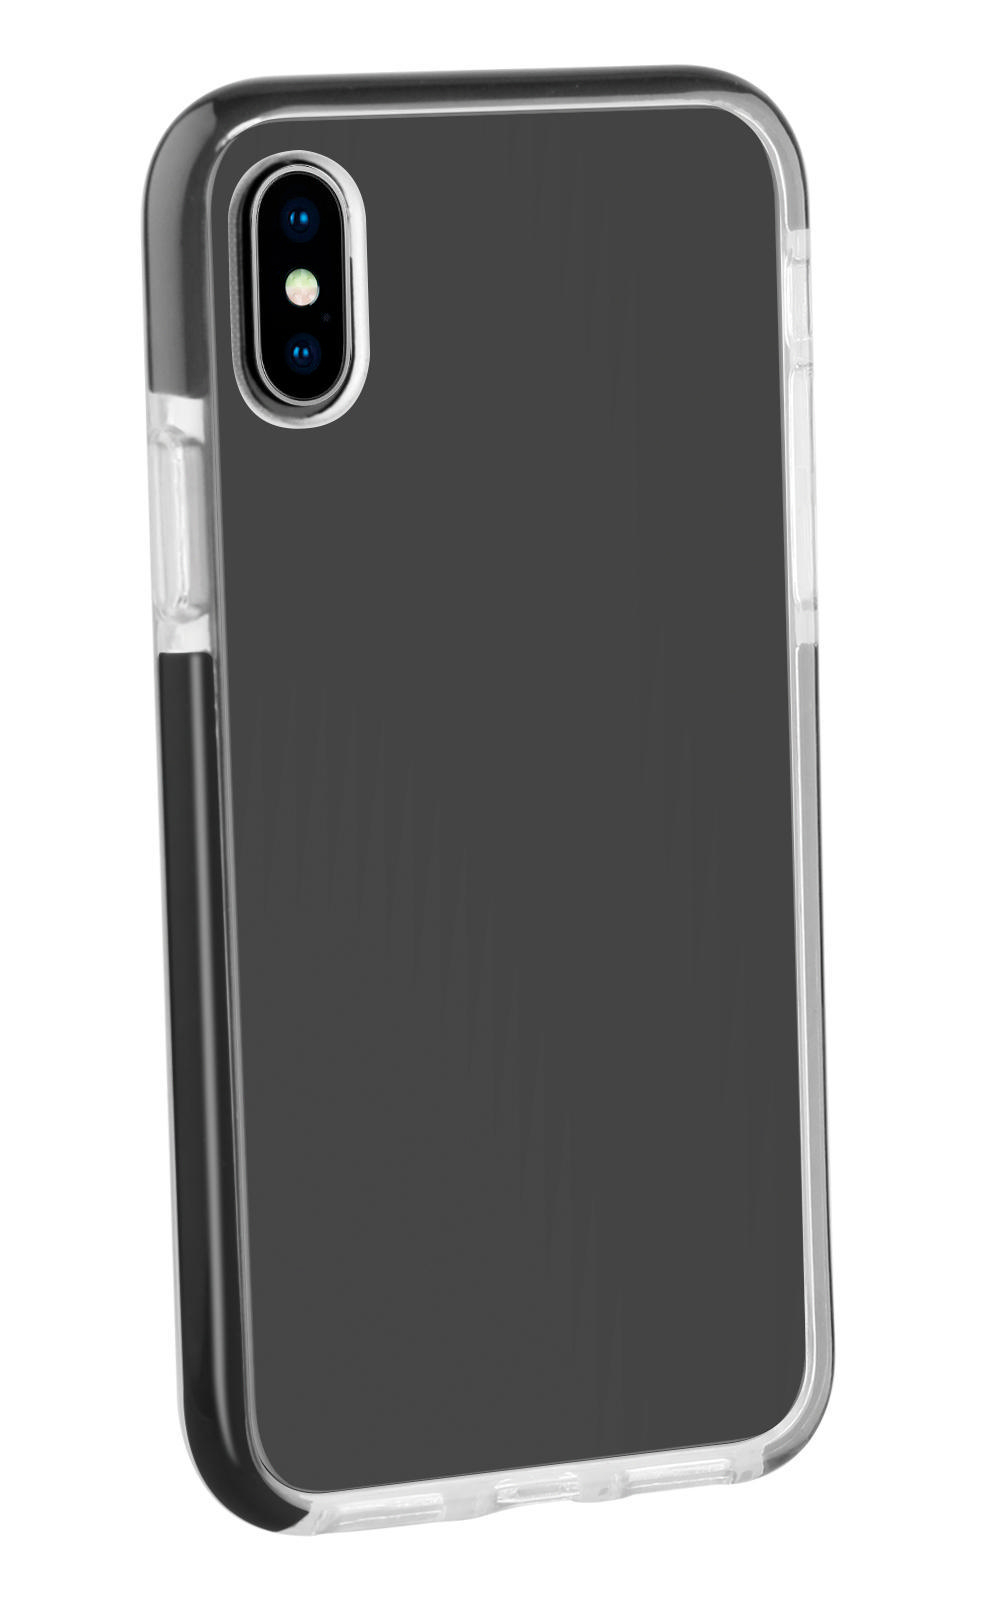 mit Rock X, Transparent Solid, XS, iPhone VIVANCO Apple, iPhone schwarzem Rahmen Backcover,